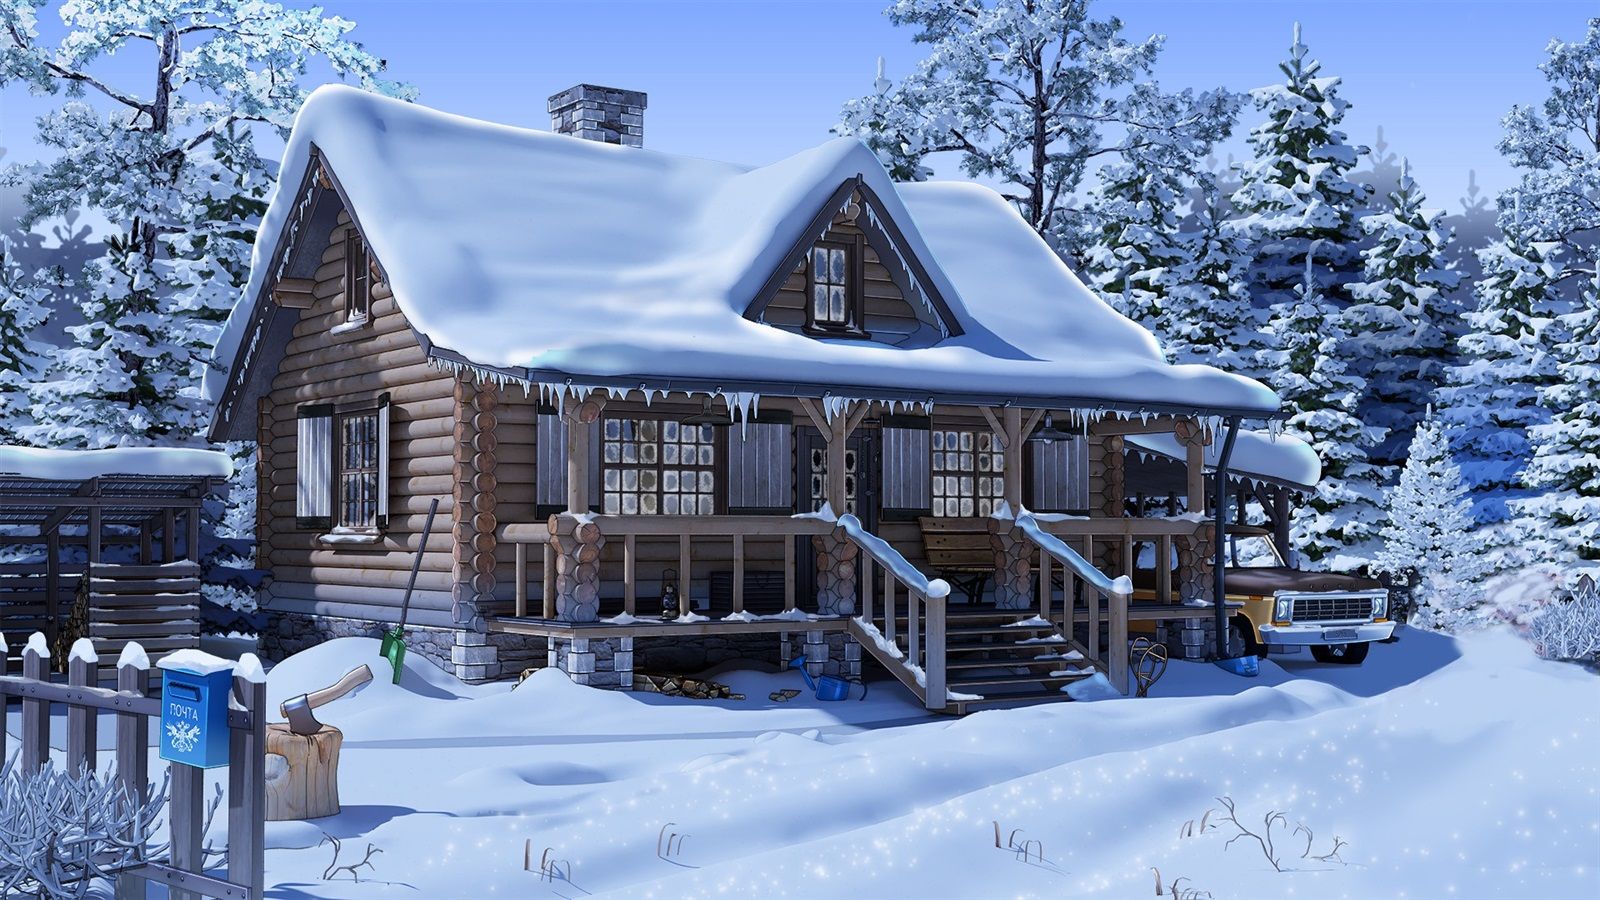 Wallpaper Snow, house, trees, car, anime 1920x1080 Full HD 2K